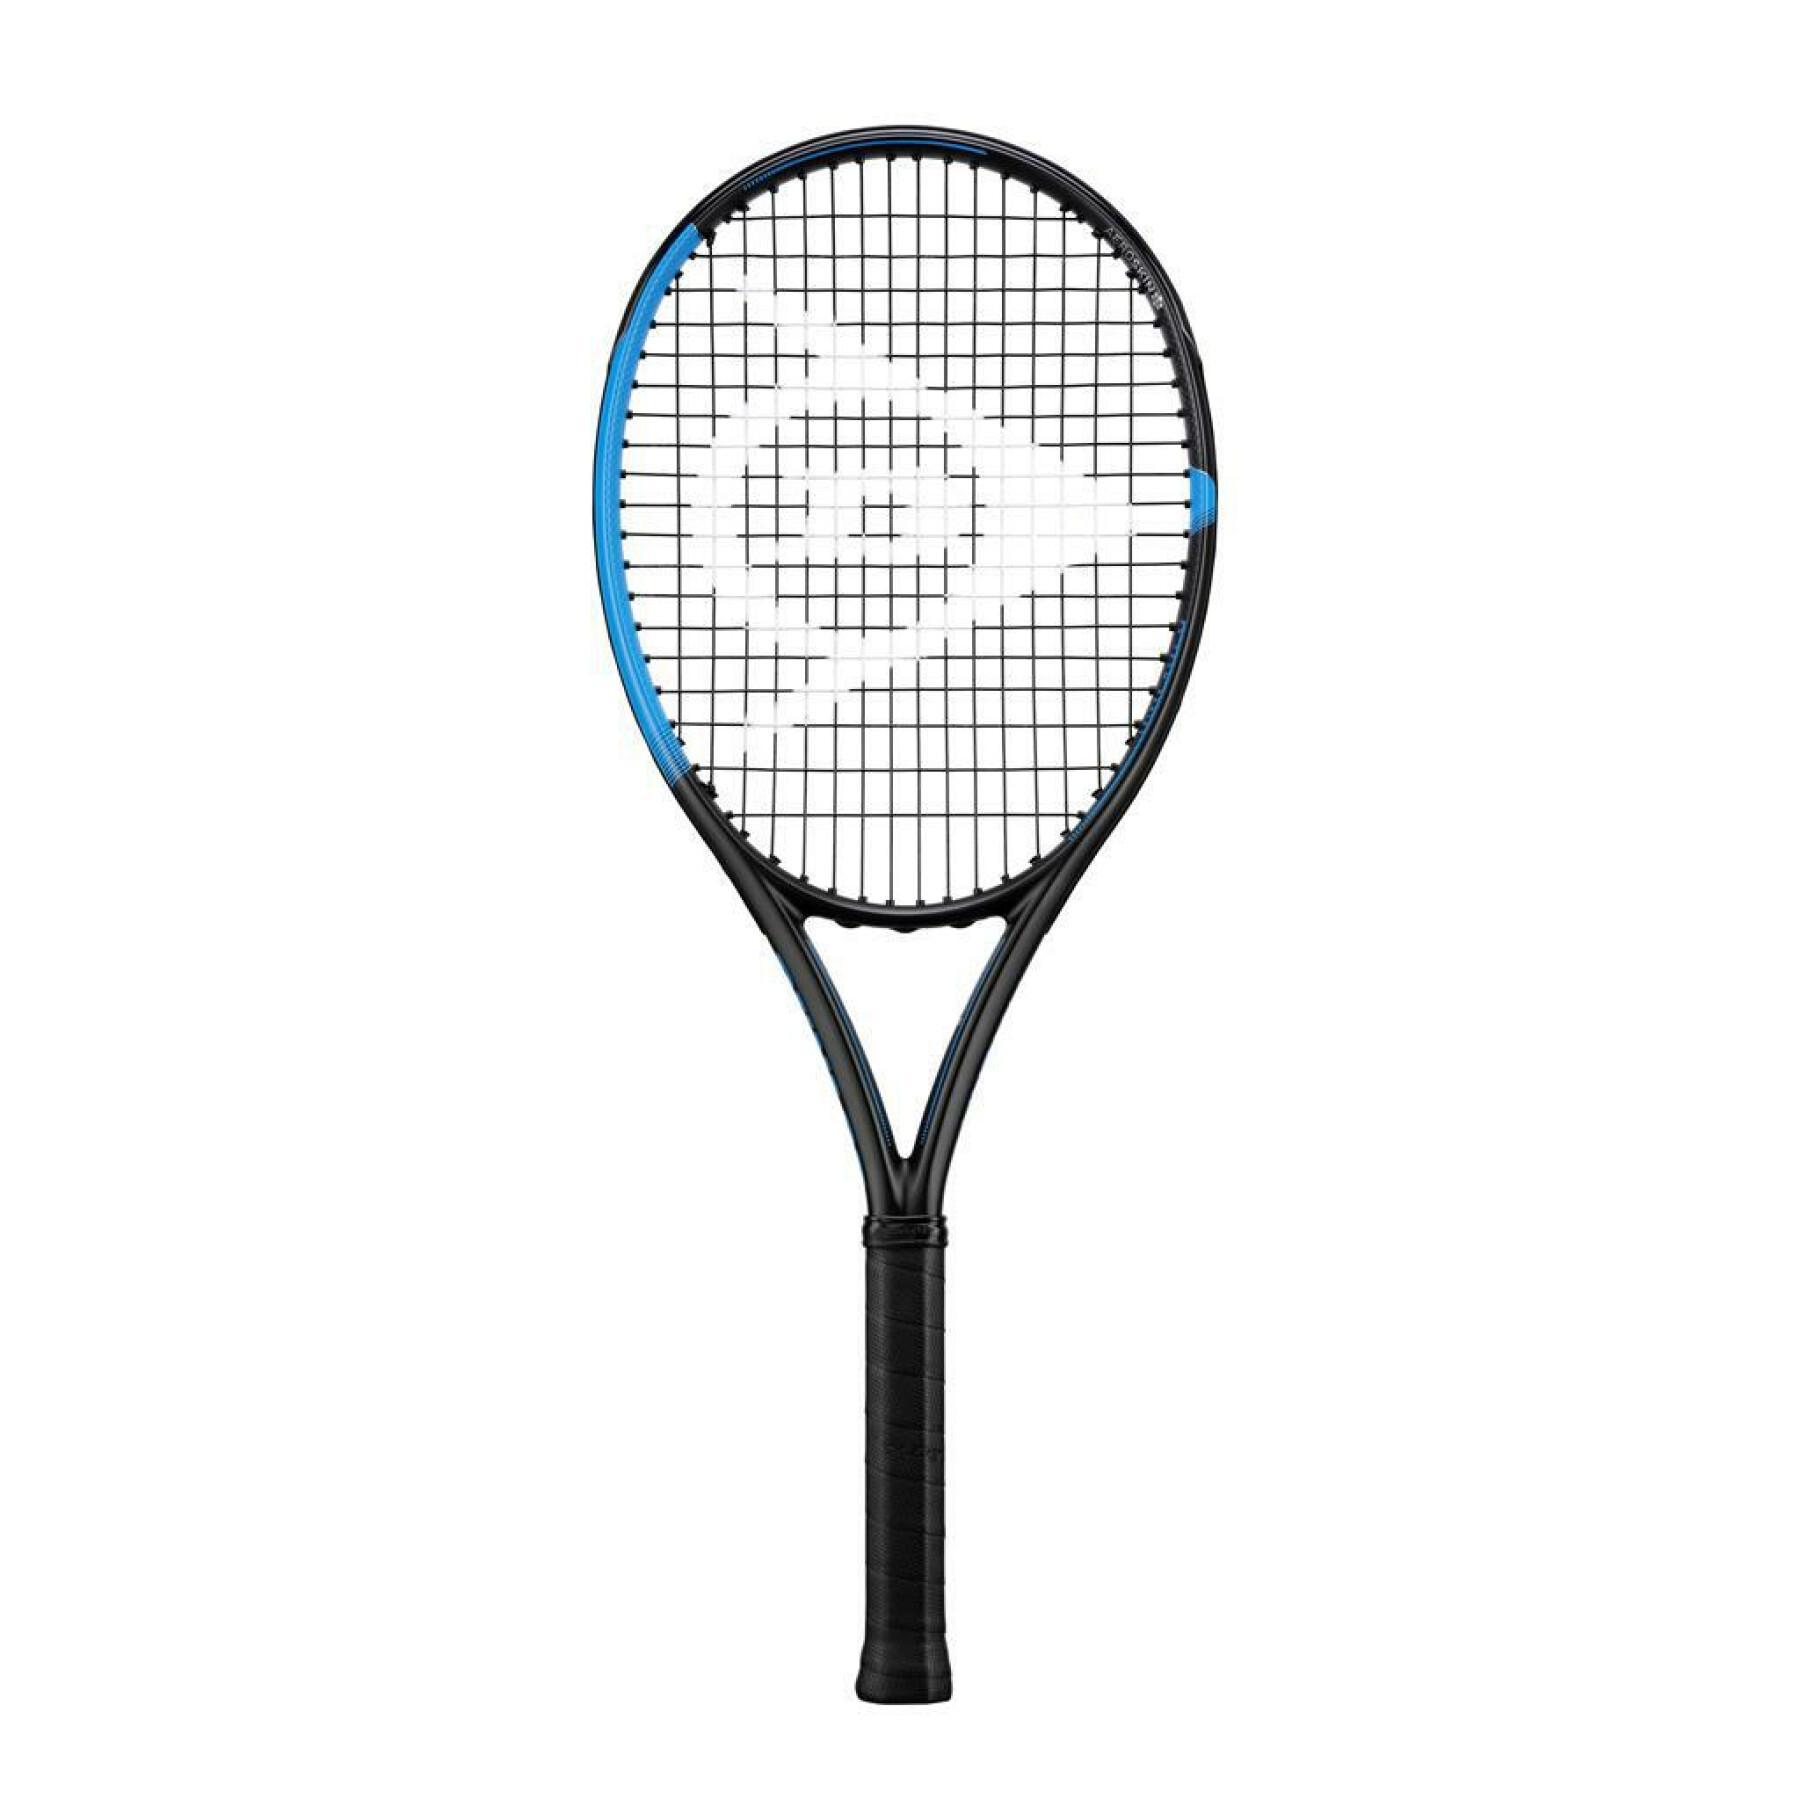 Children's racket Dunlop fx team 285 g0 nh